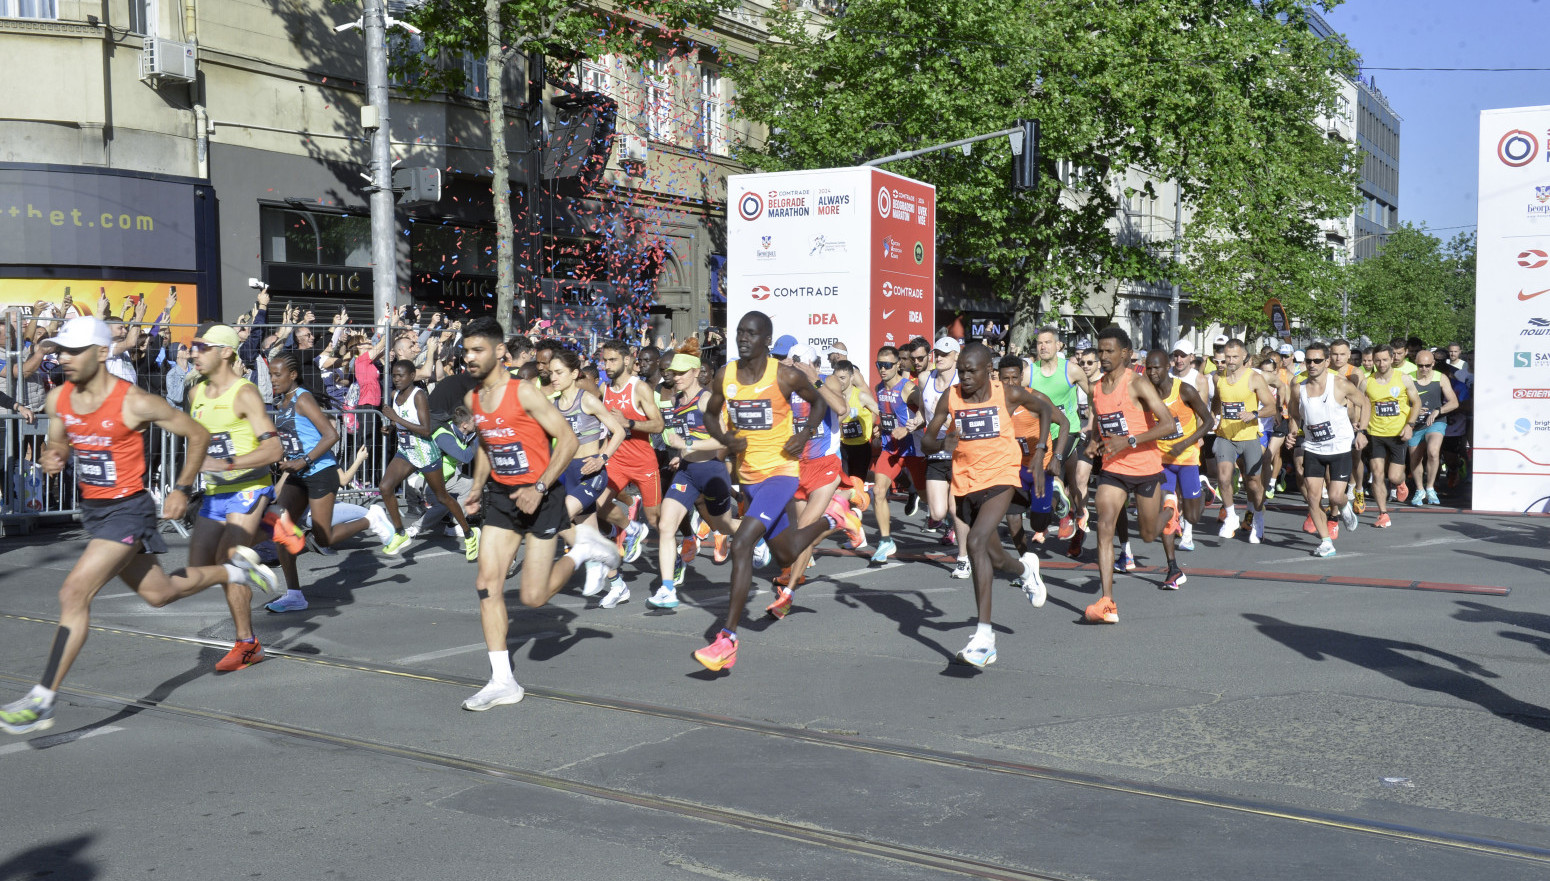 Tri, četiri... sad! Počeo Beogradski maraton FOTO/VIDEO